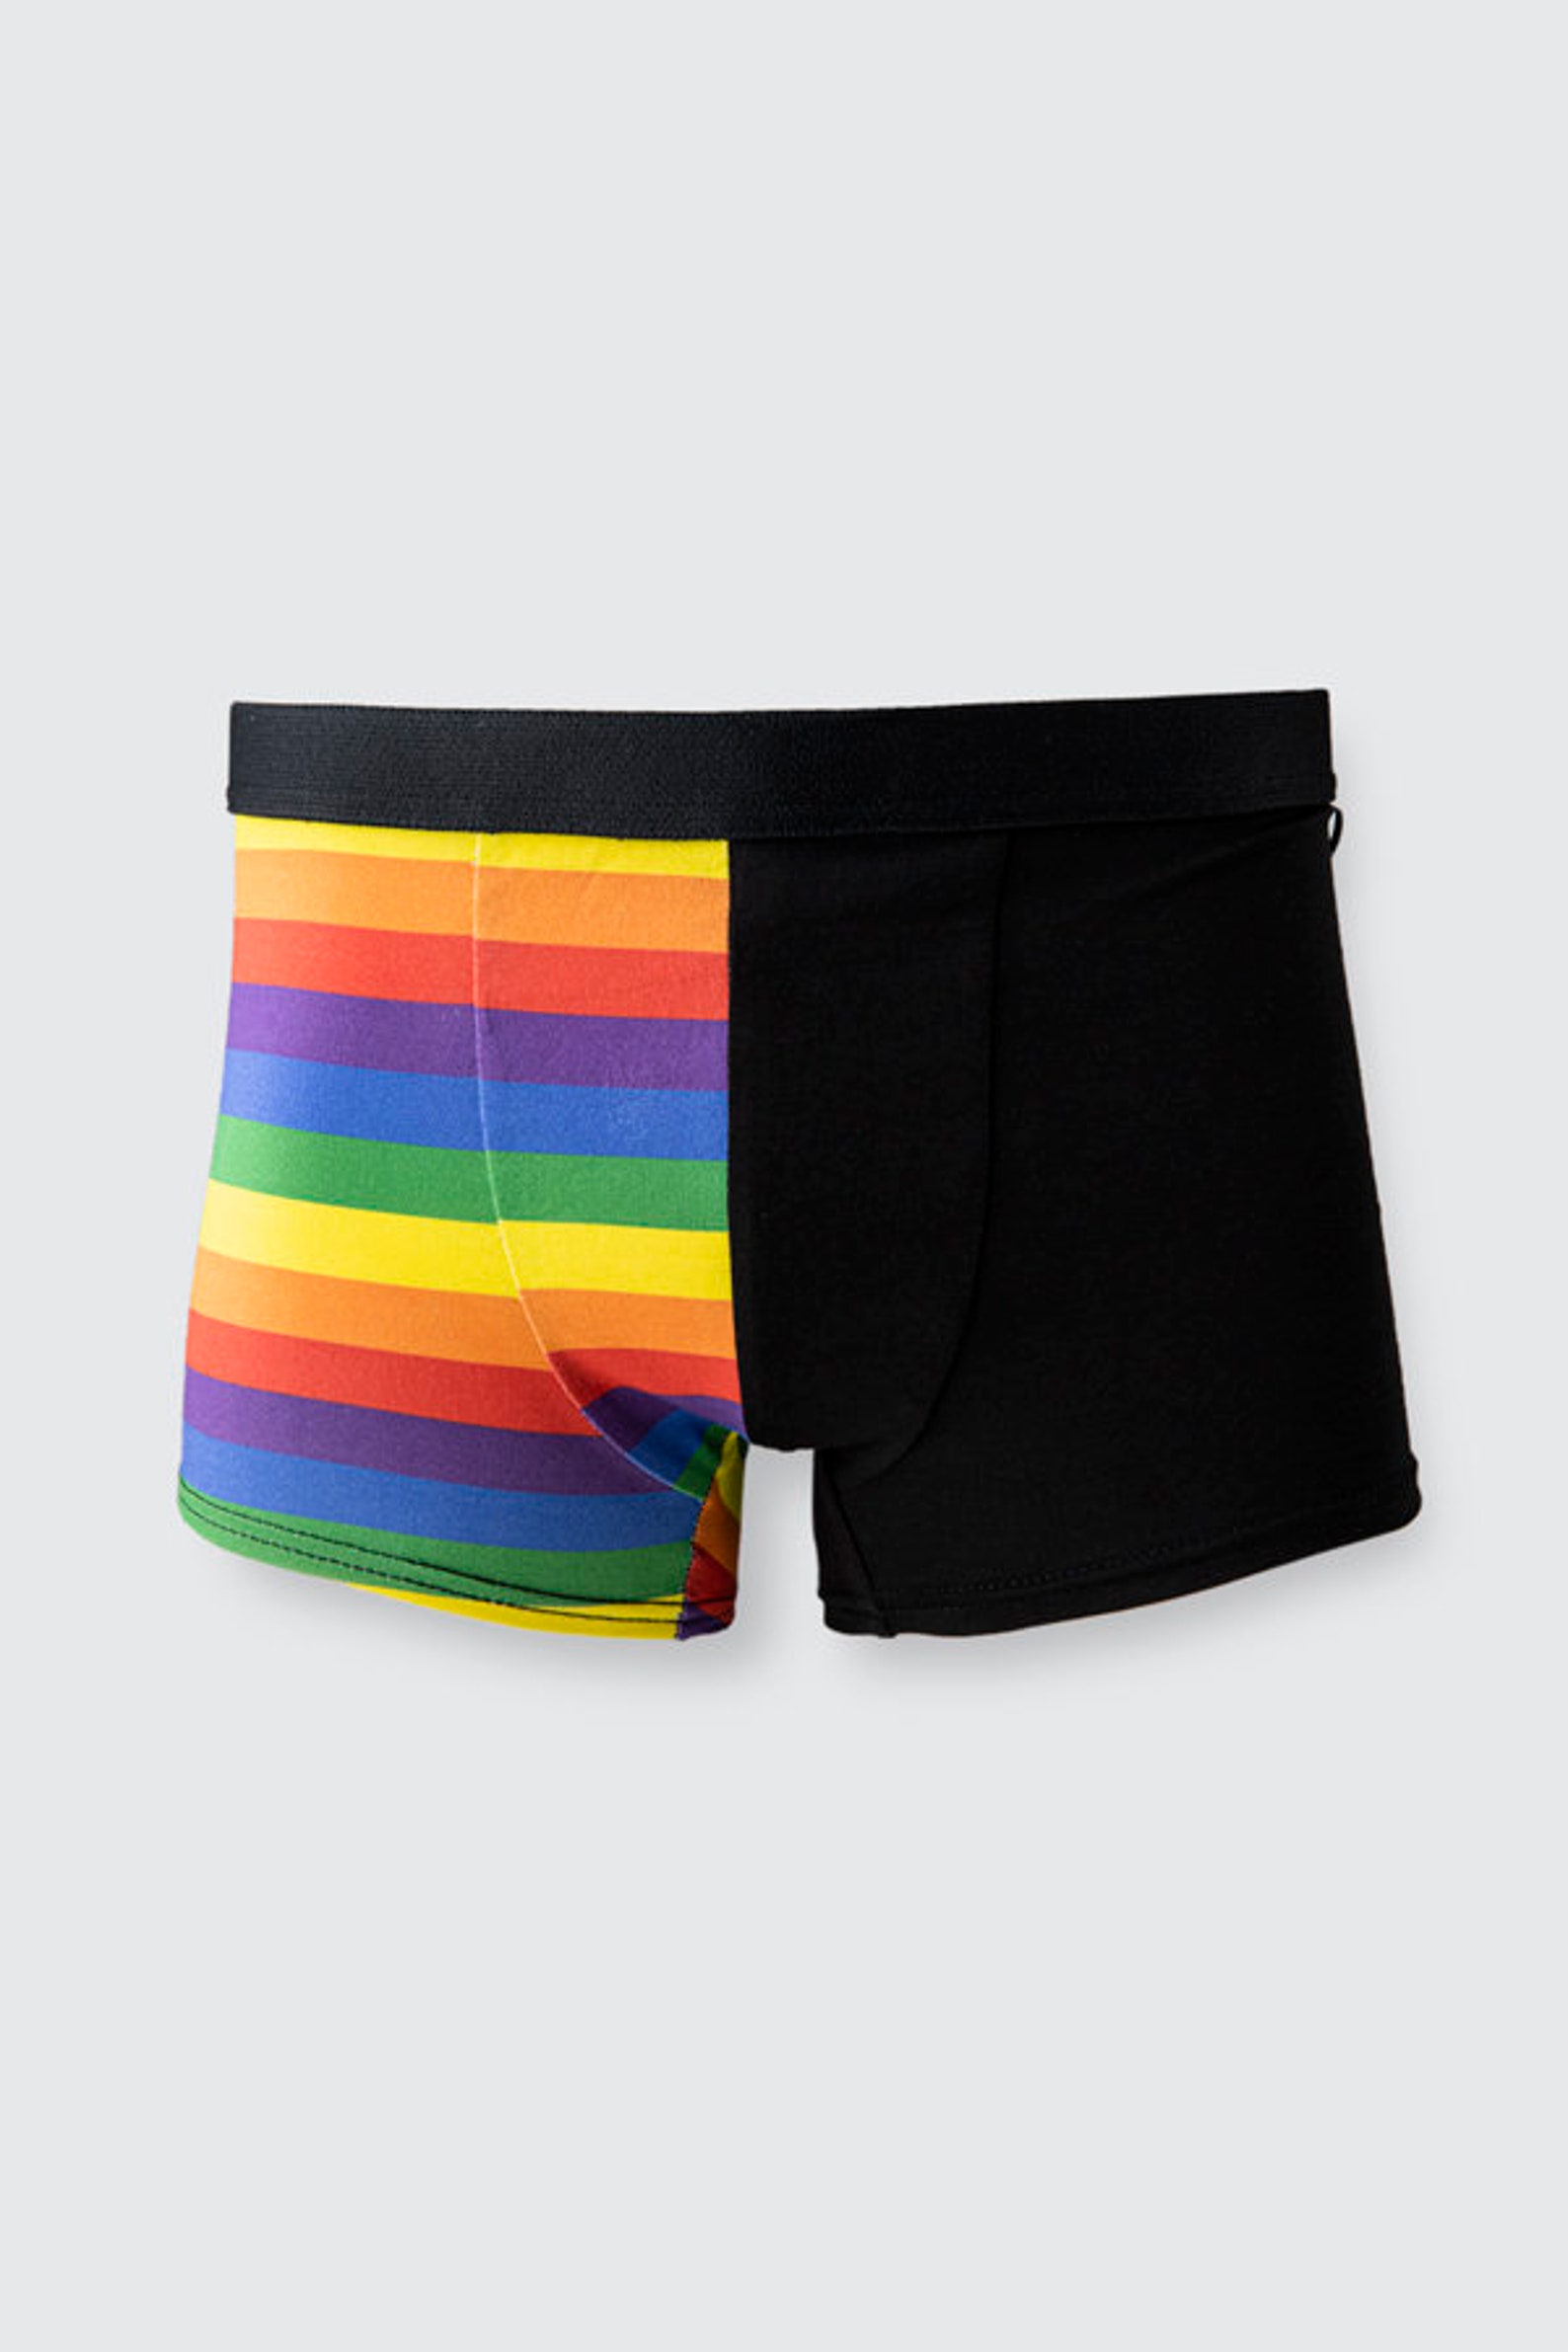 Underwear for him boxers pants RAINBOW LGBTQ PRIDE | Etsy